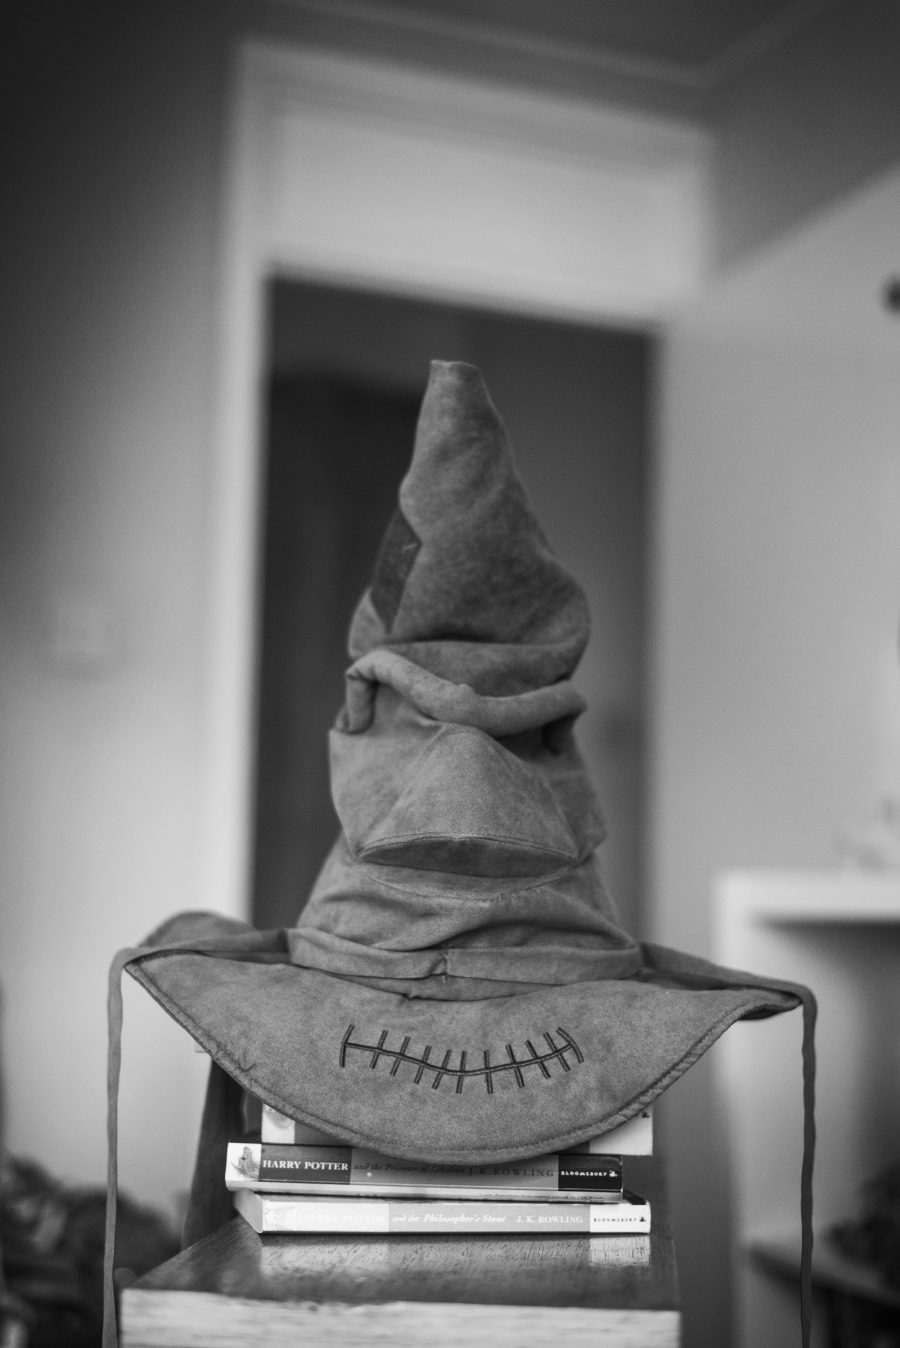 Hogwarts harry potter sorting hat toy